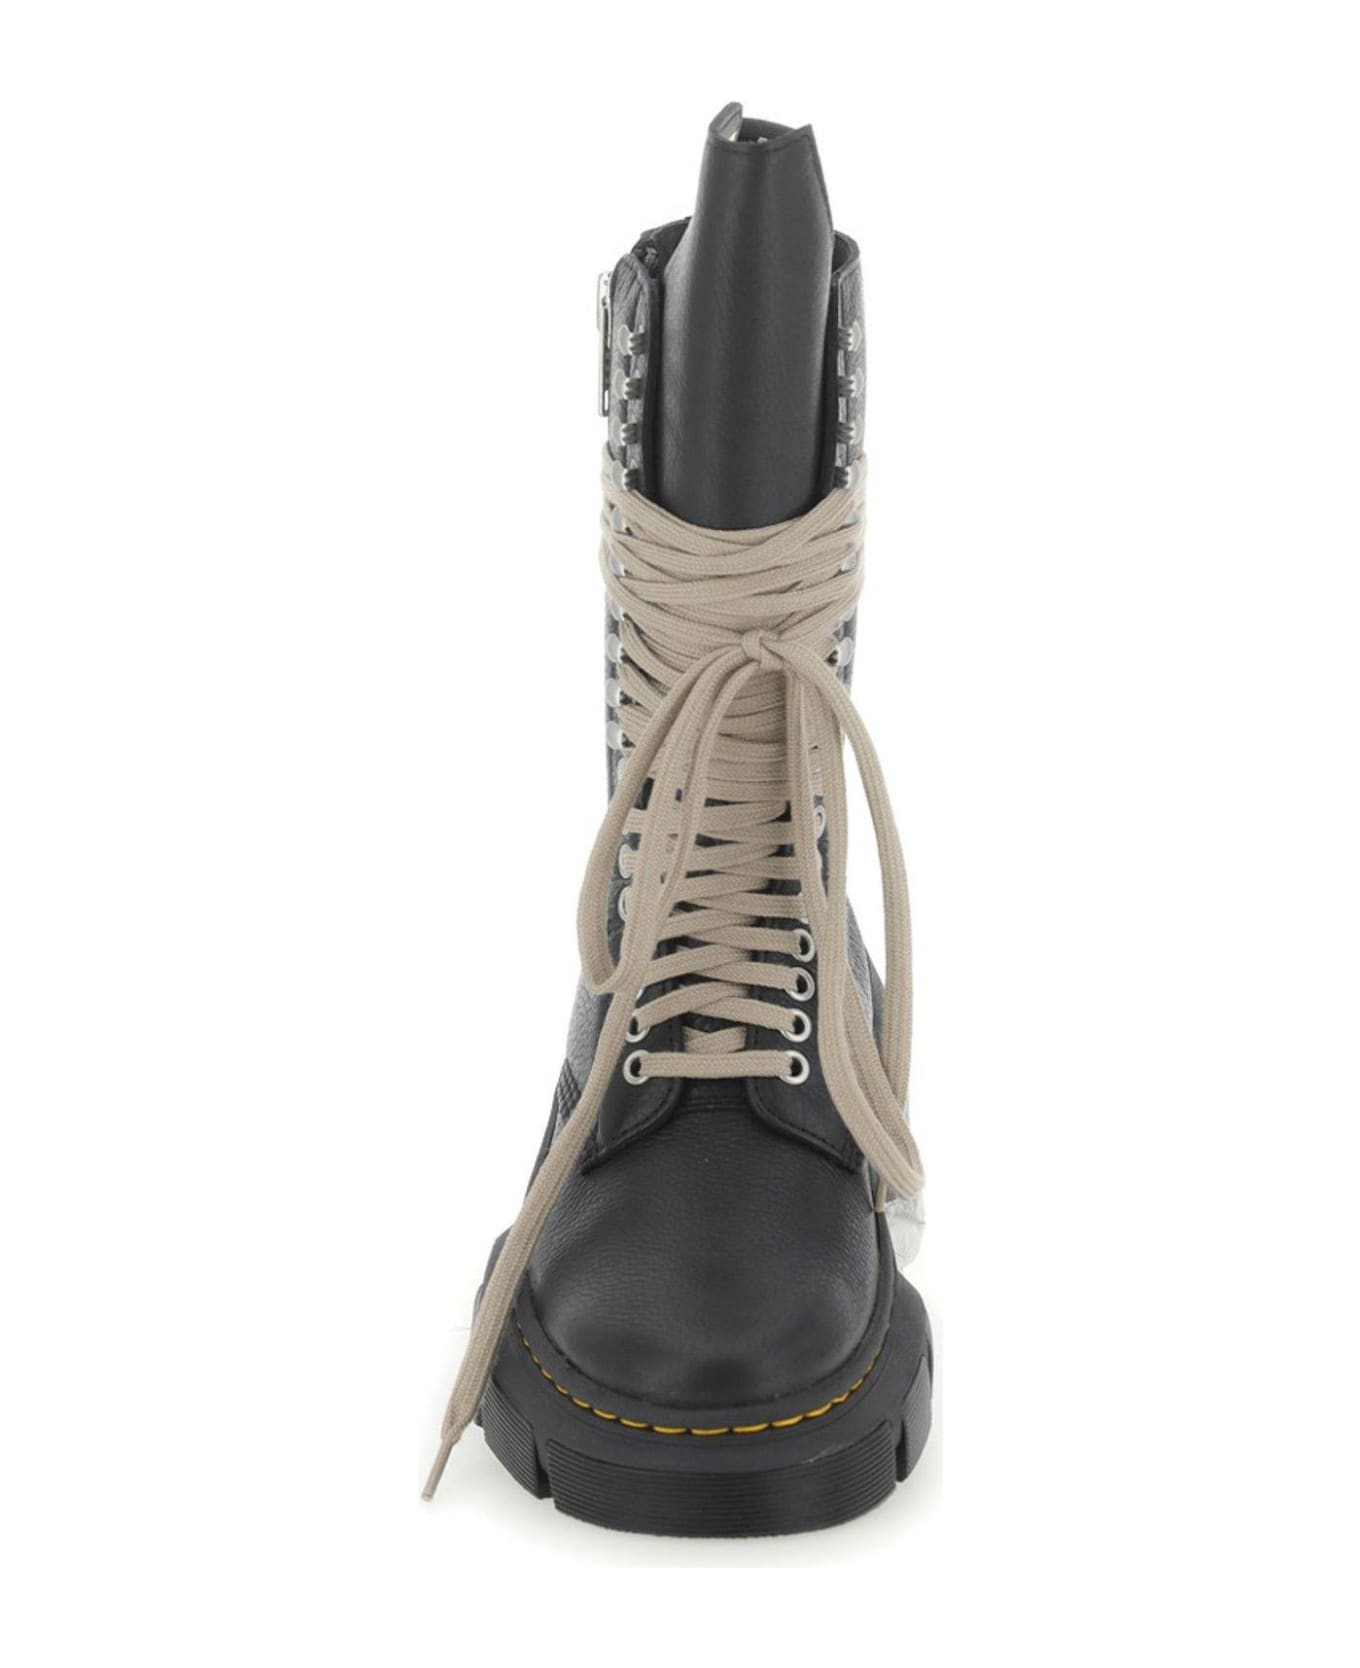 Rick Owens x Dr. Martens X Dr. Martens 1918 Dmxl Calf Length Boots - BLACK